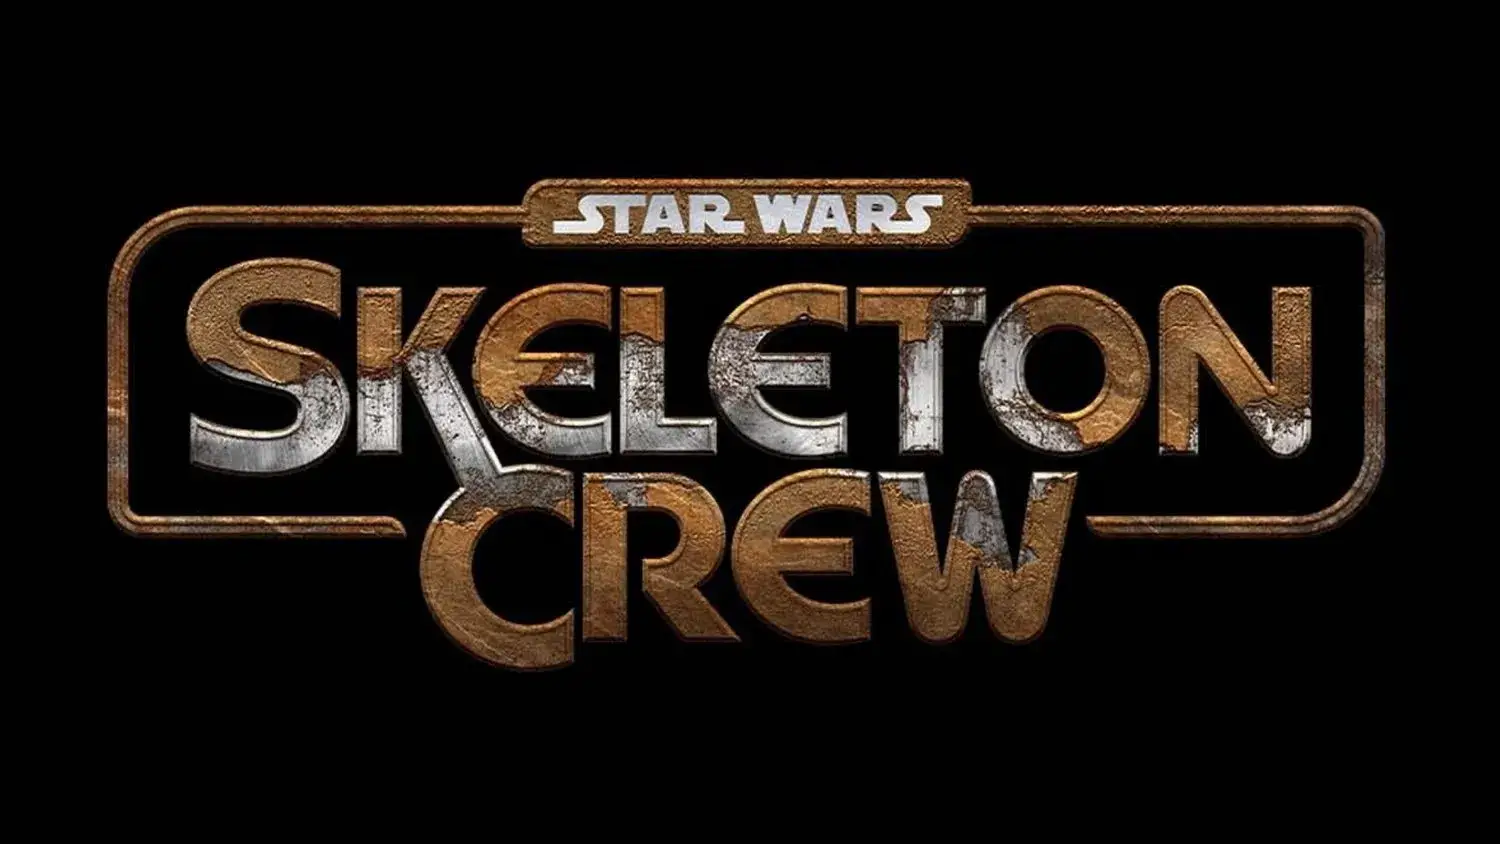 star wars skeleton crew